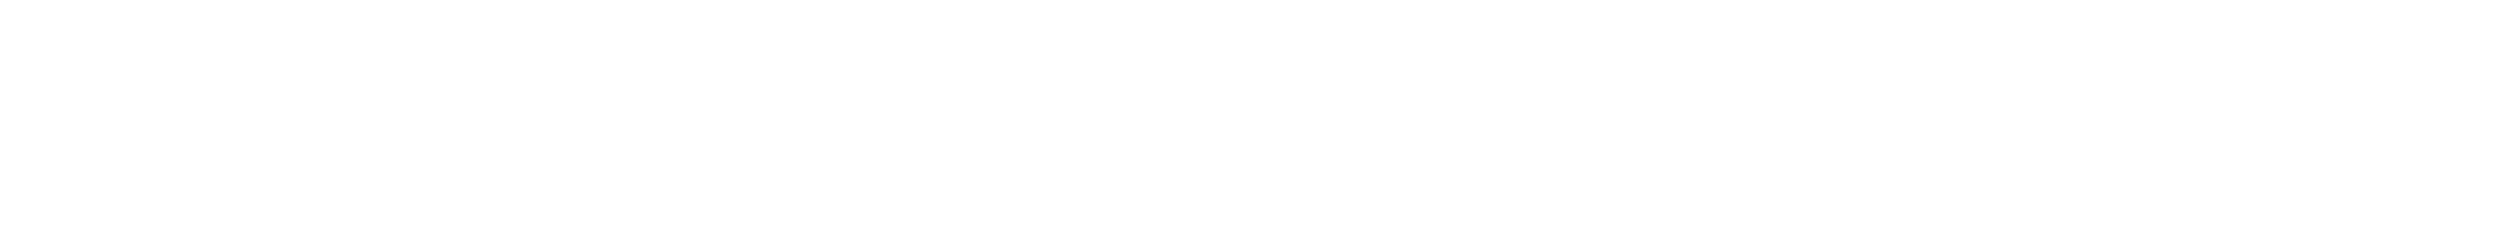 Logo for Atlantic Canada Opportunities Agency (ACOA)